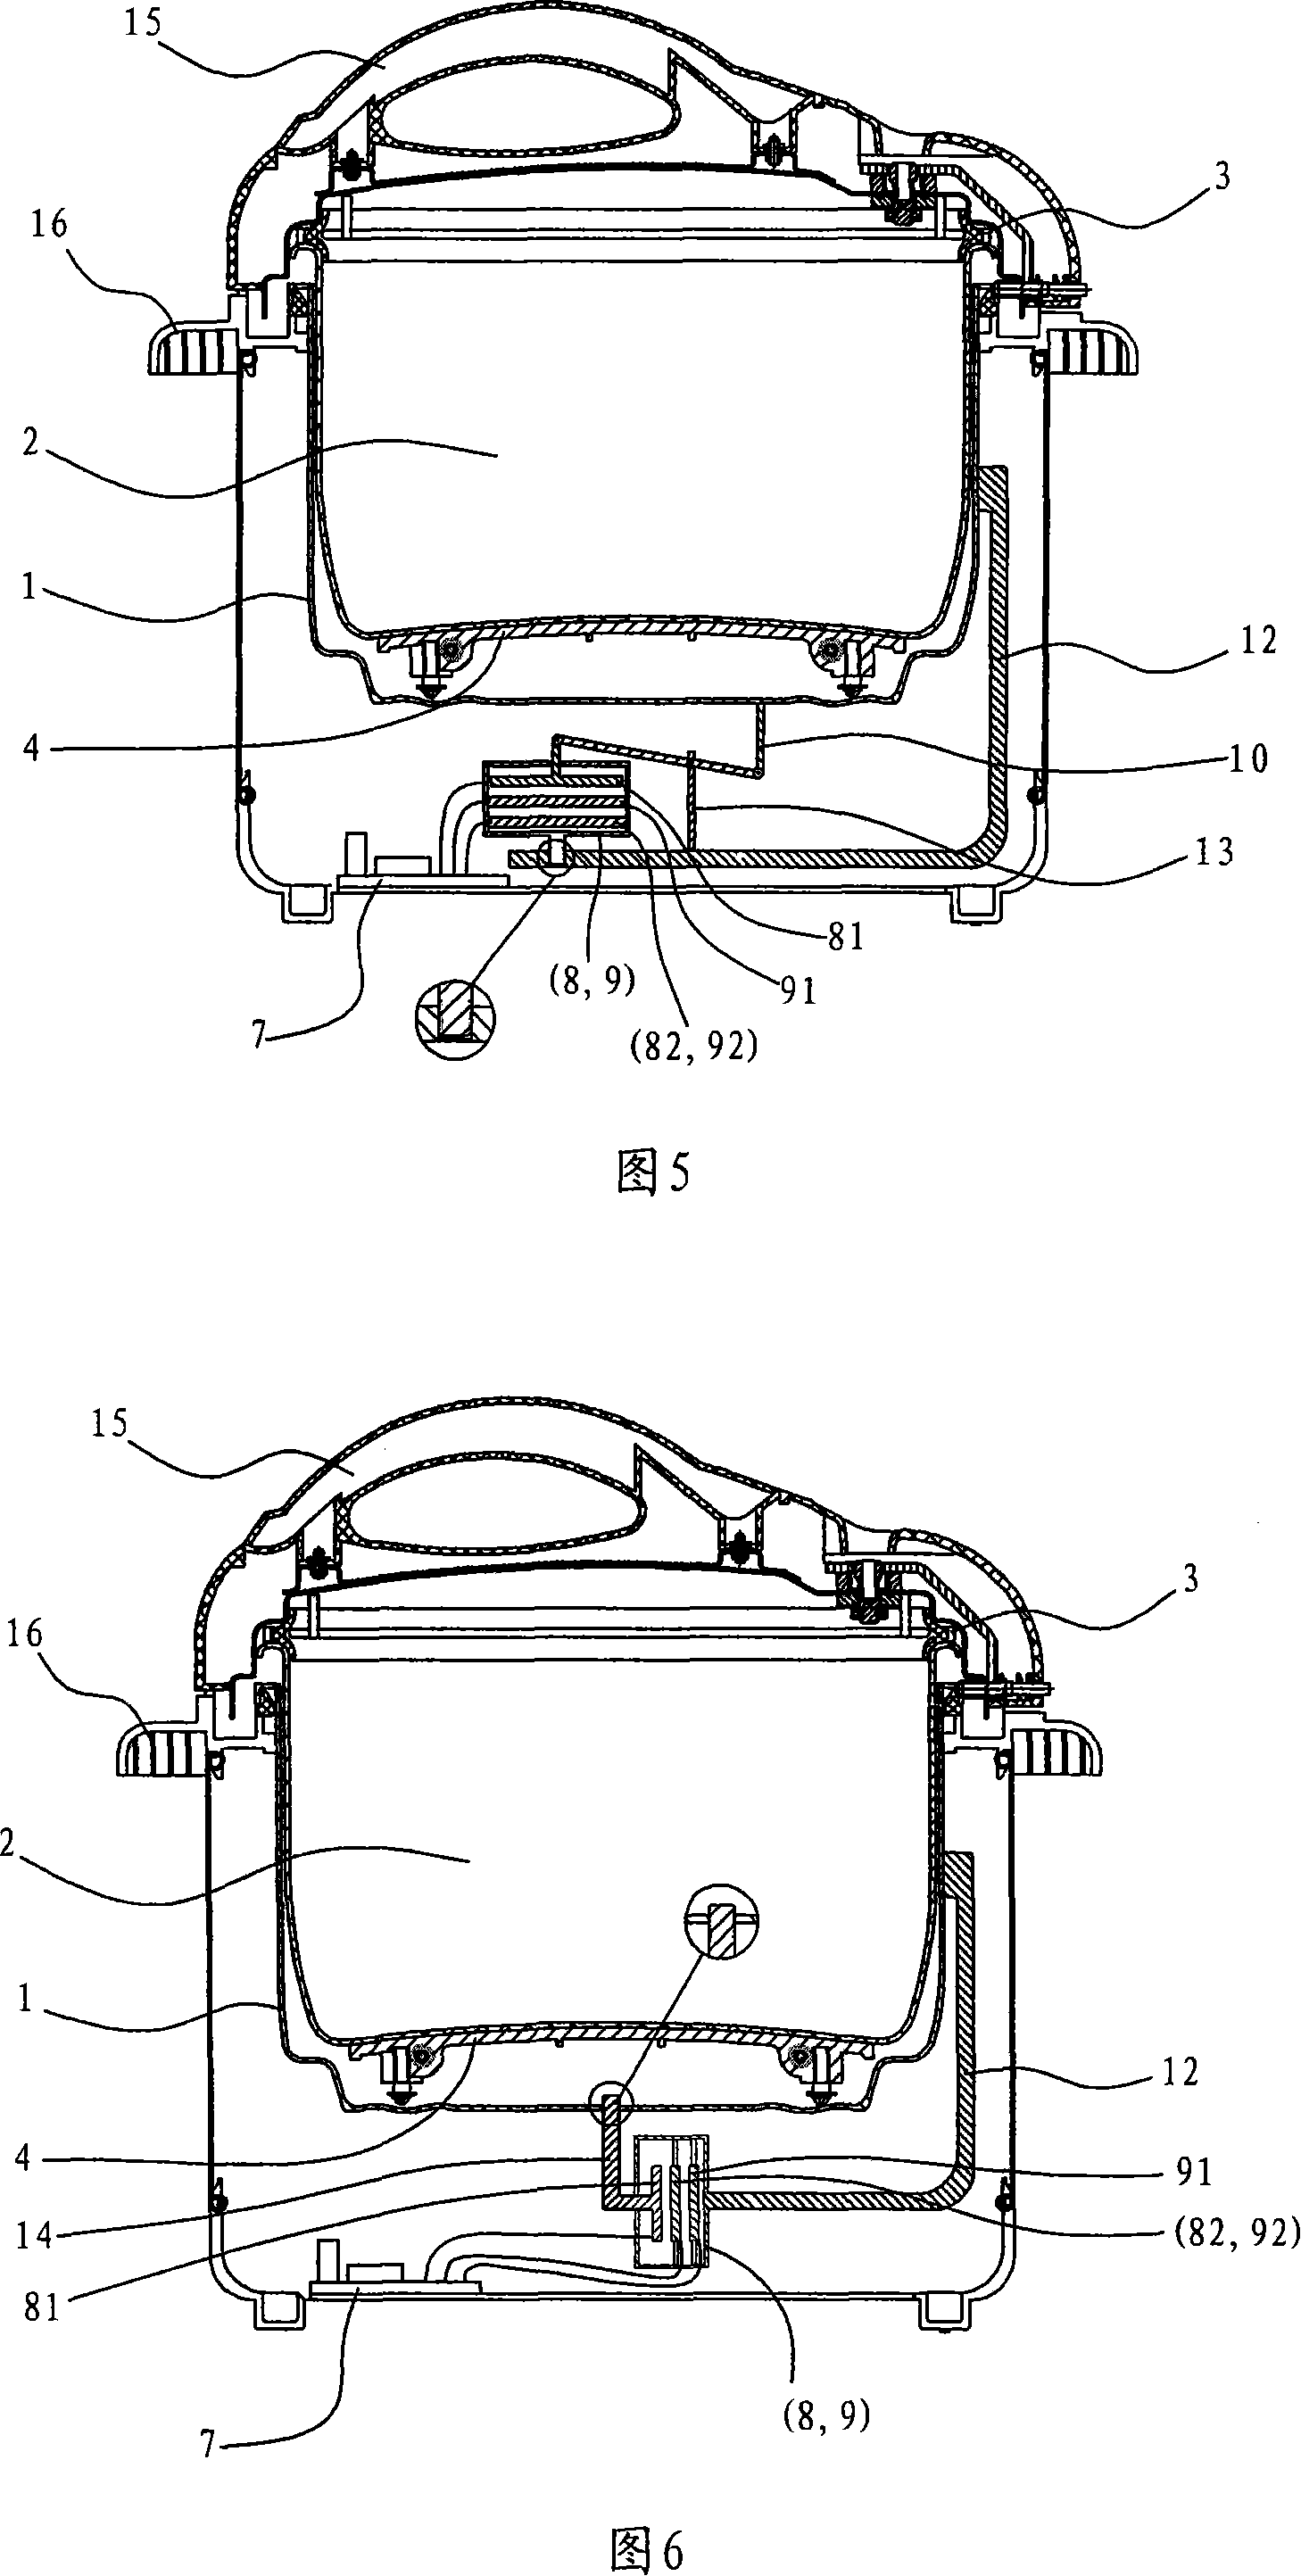 Modified electric pressure cooker